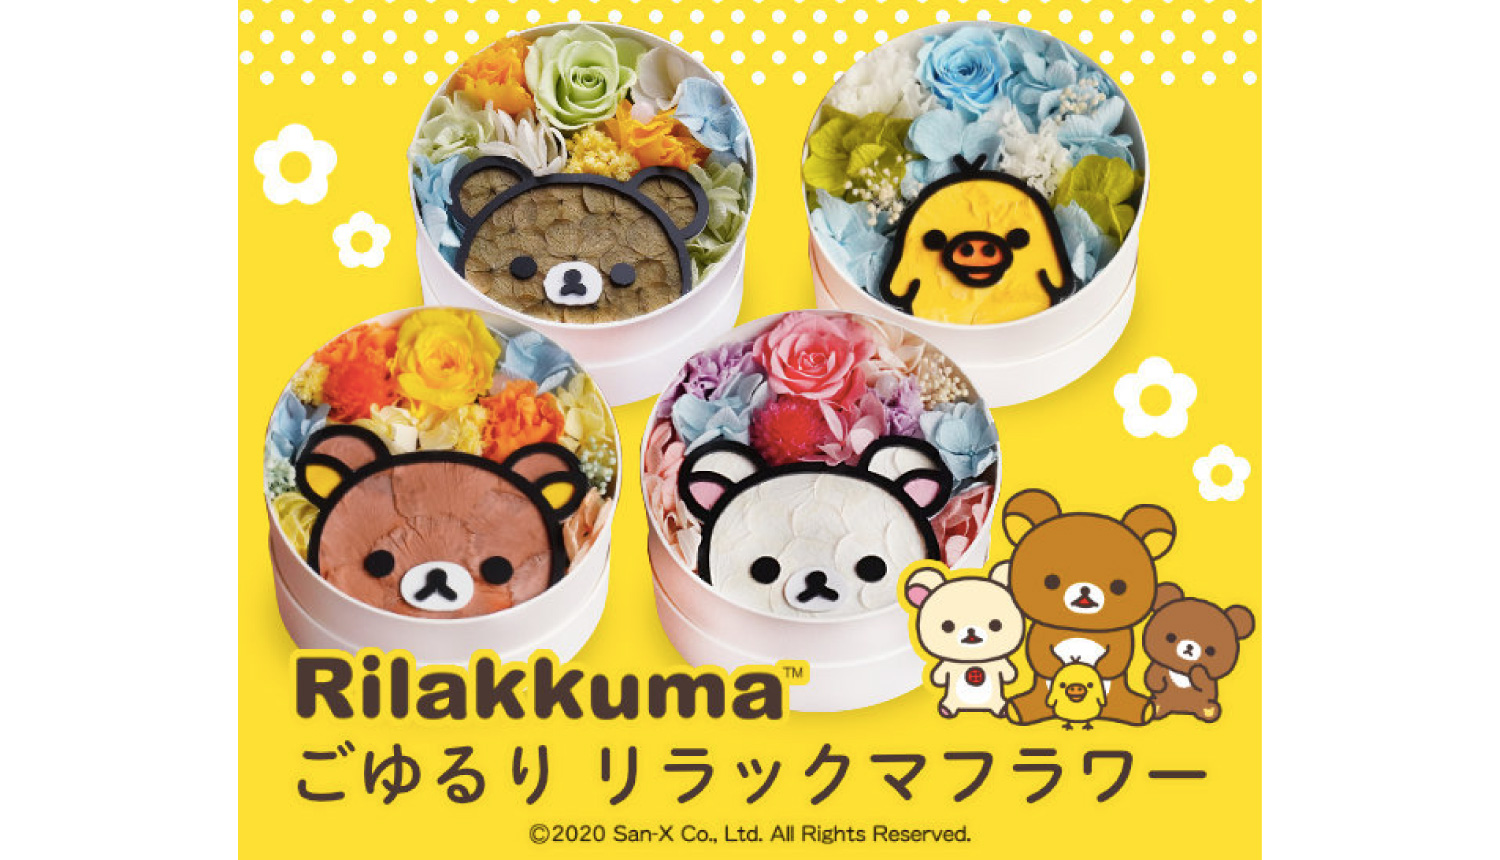 Rilakkuma puppy plush toy Rilakkma Marche store limited San-x 